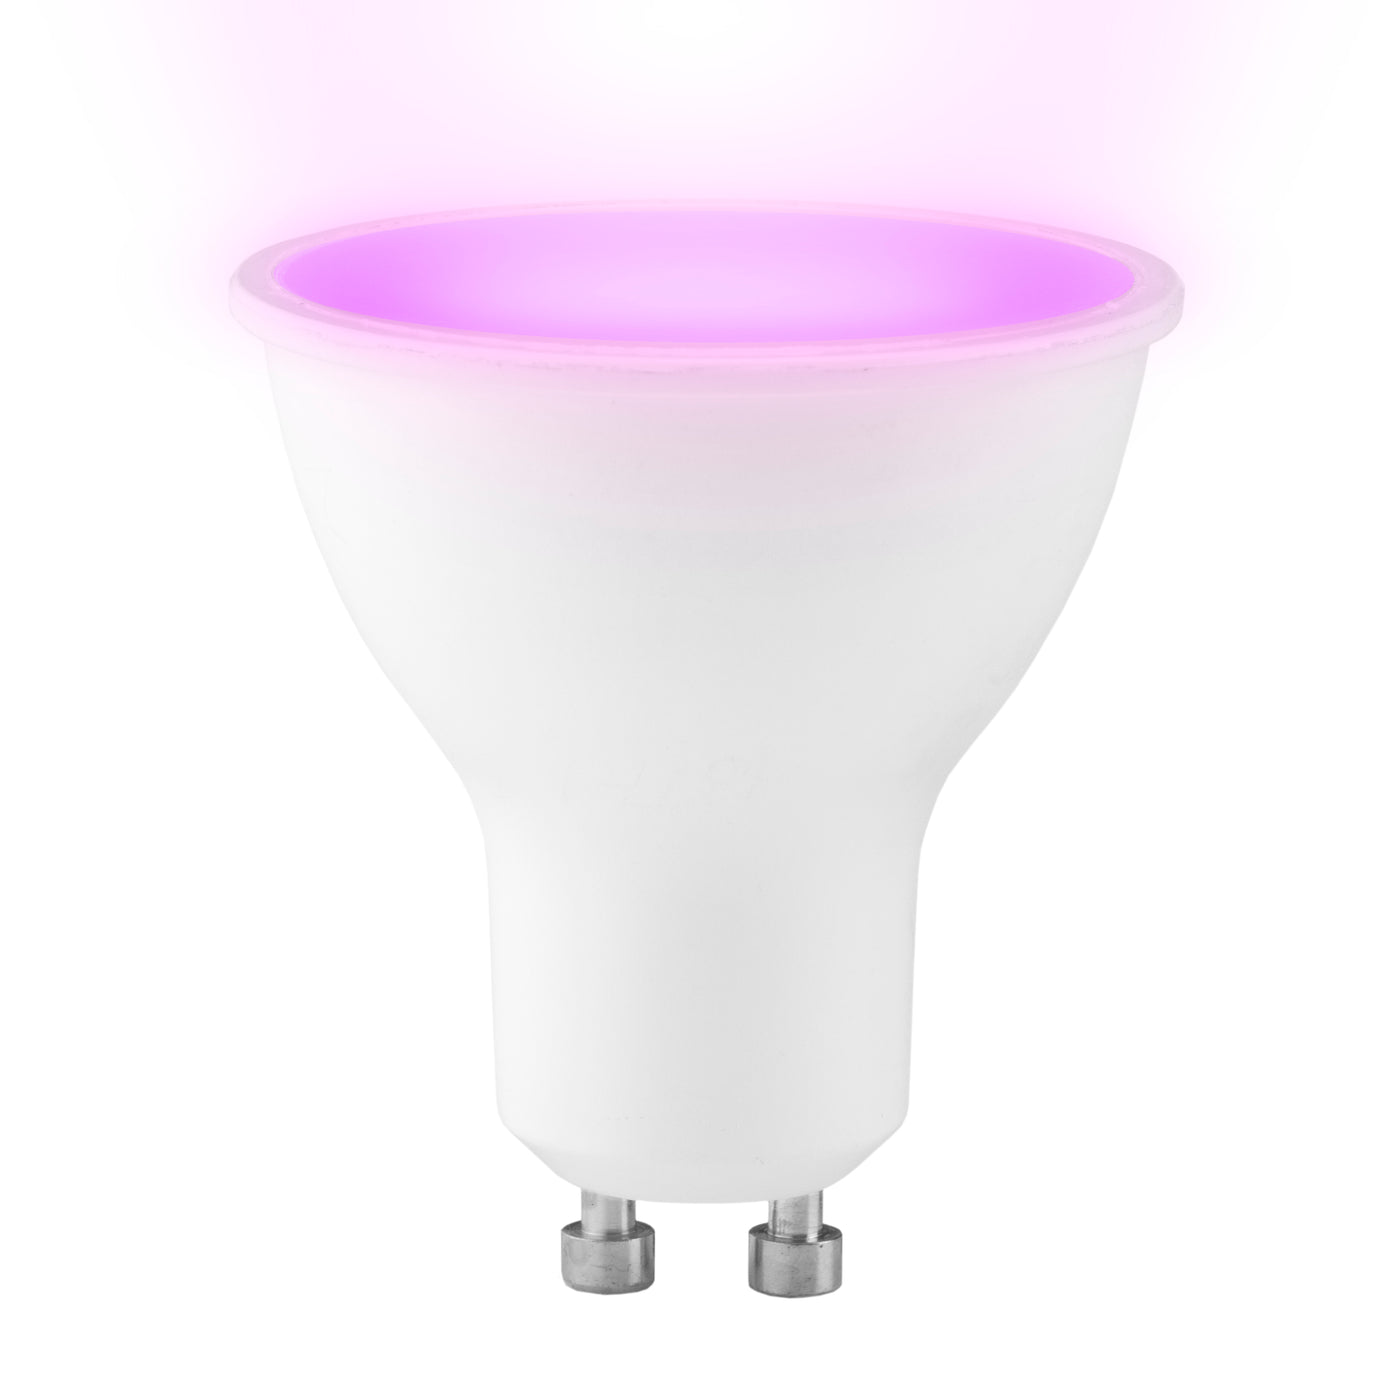 Alecto SMARTLIGHT40 - Smart-LED-Farblampe mit WLAN